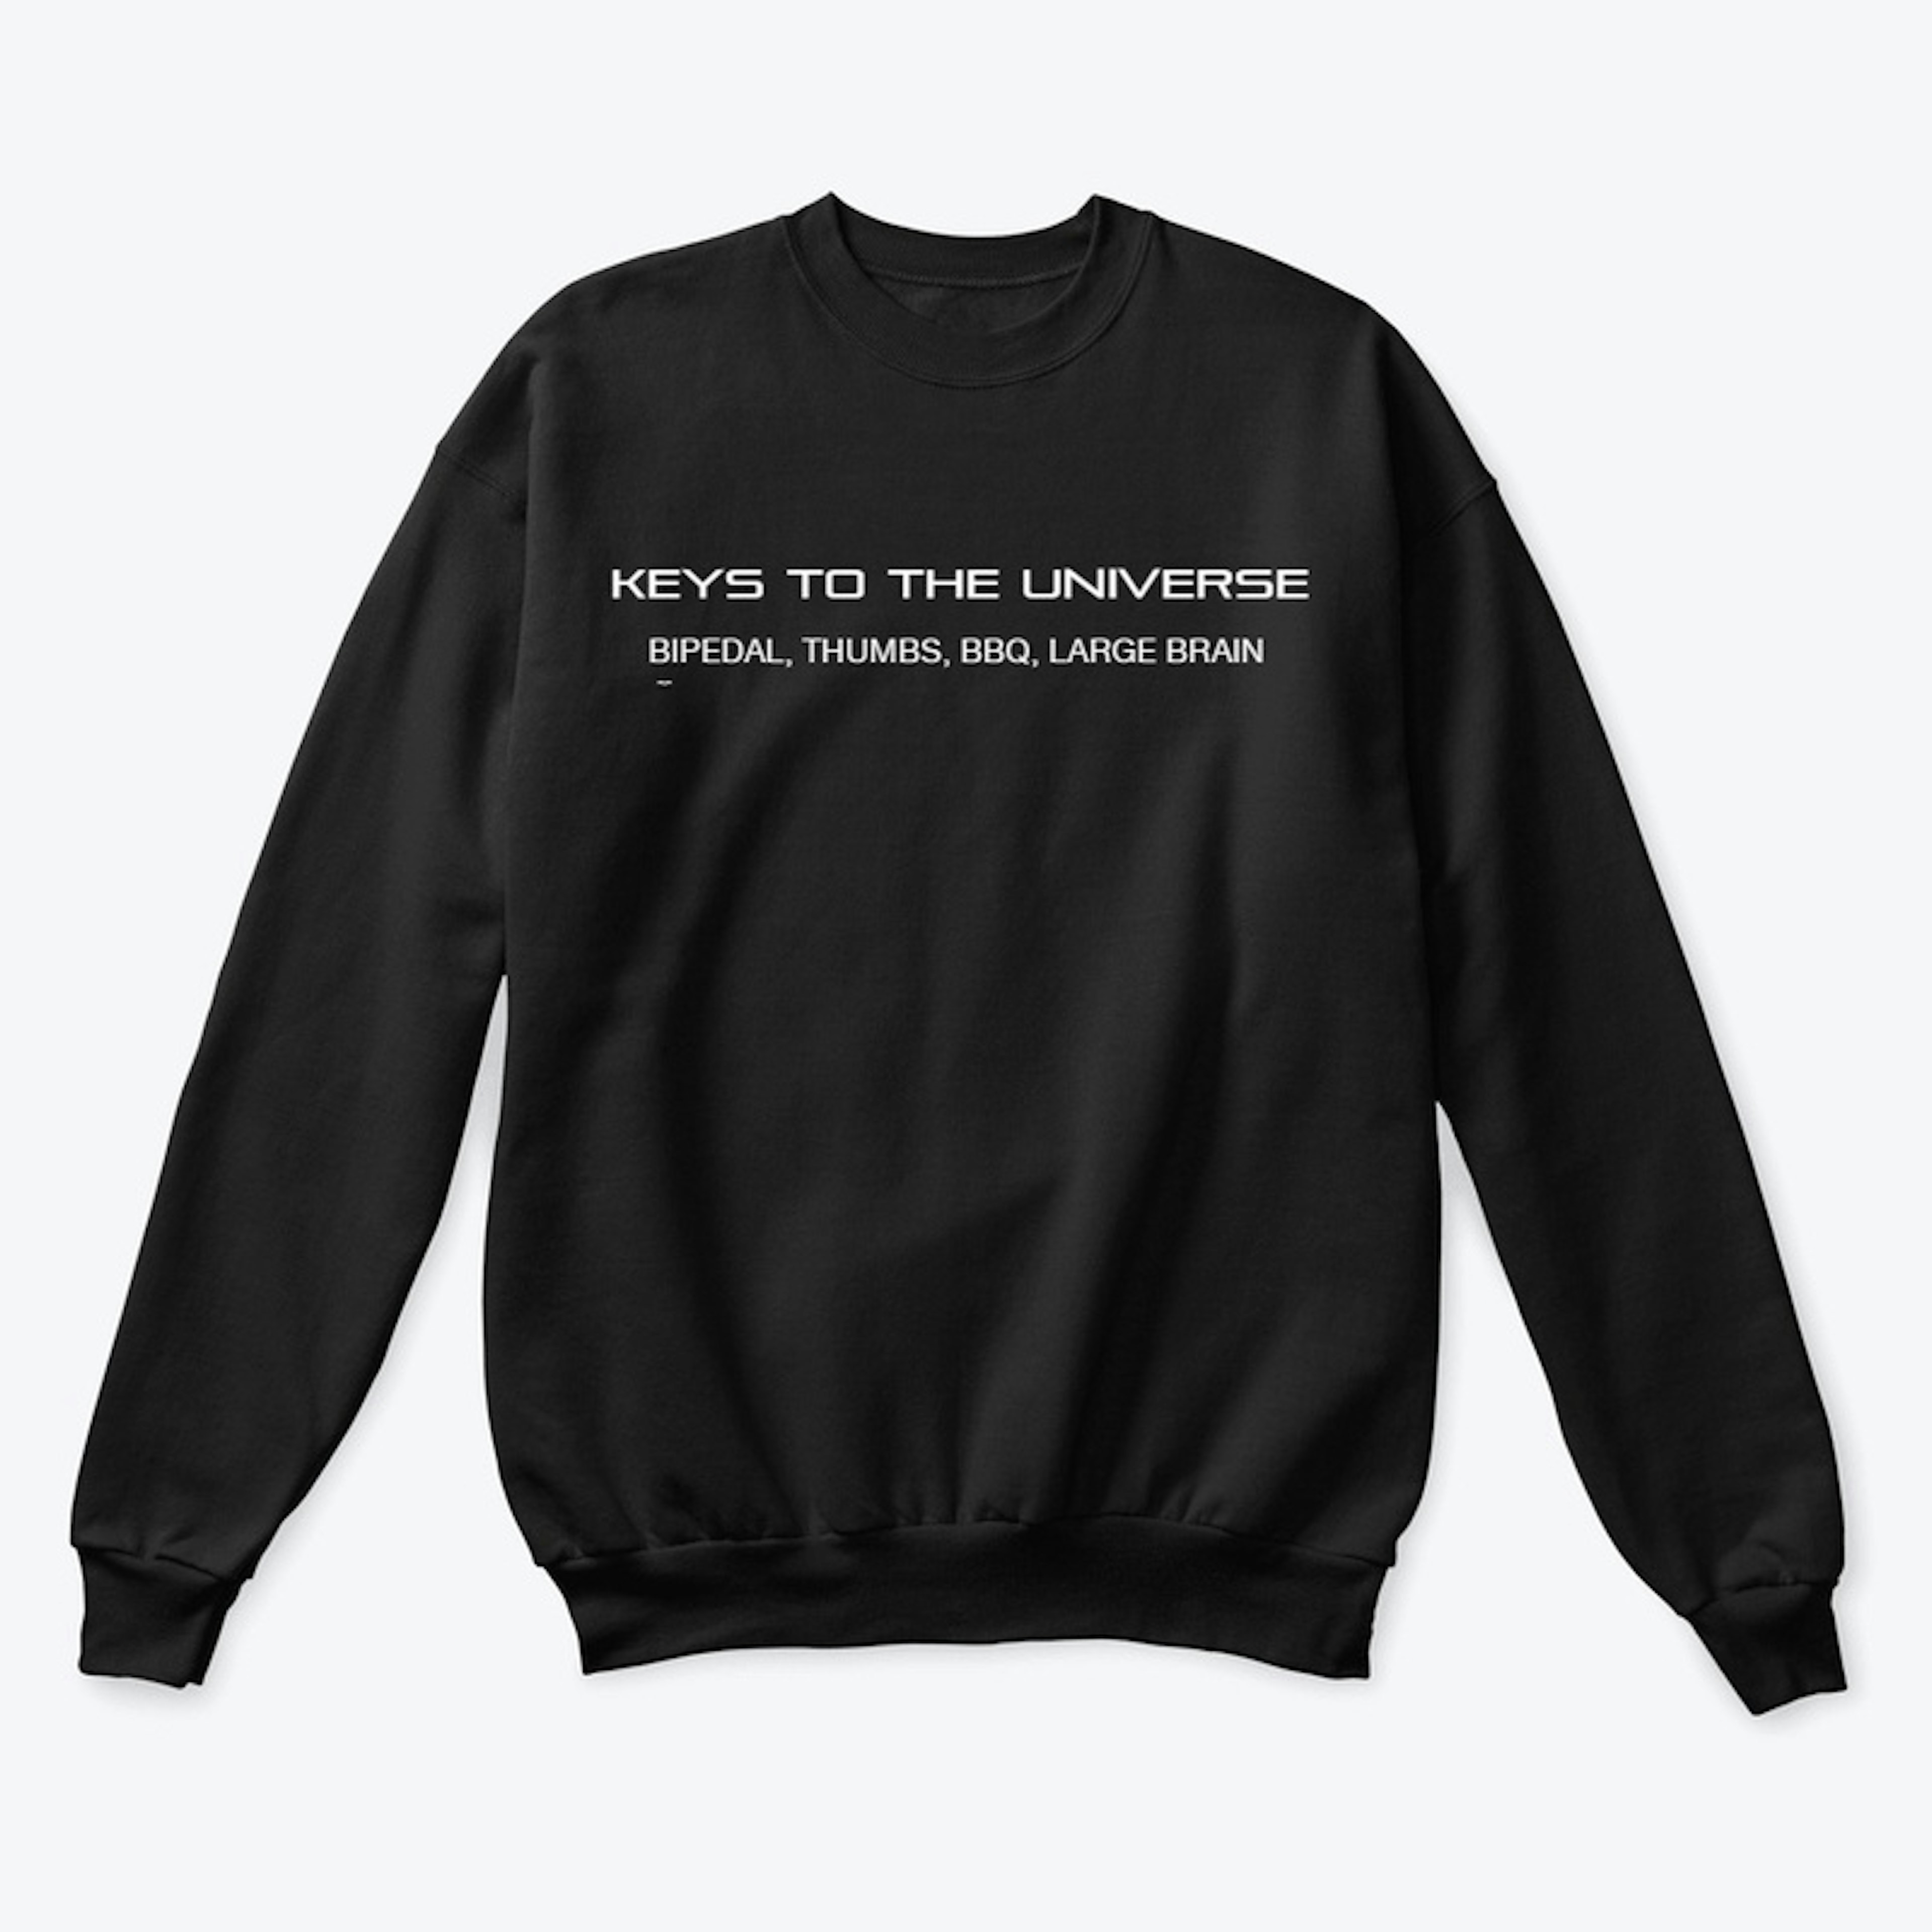 Keys To the Universe sweatshirt